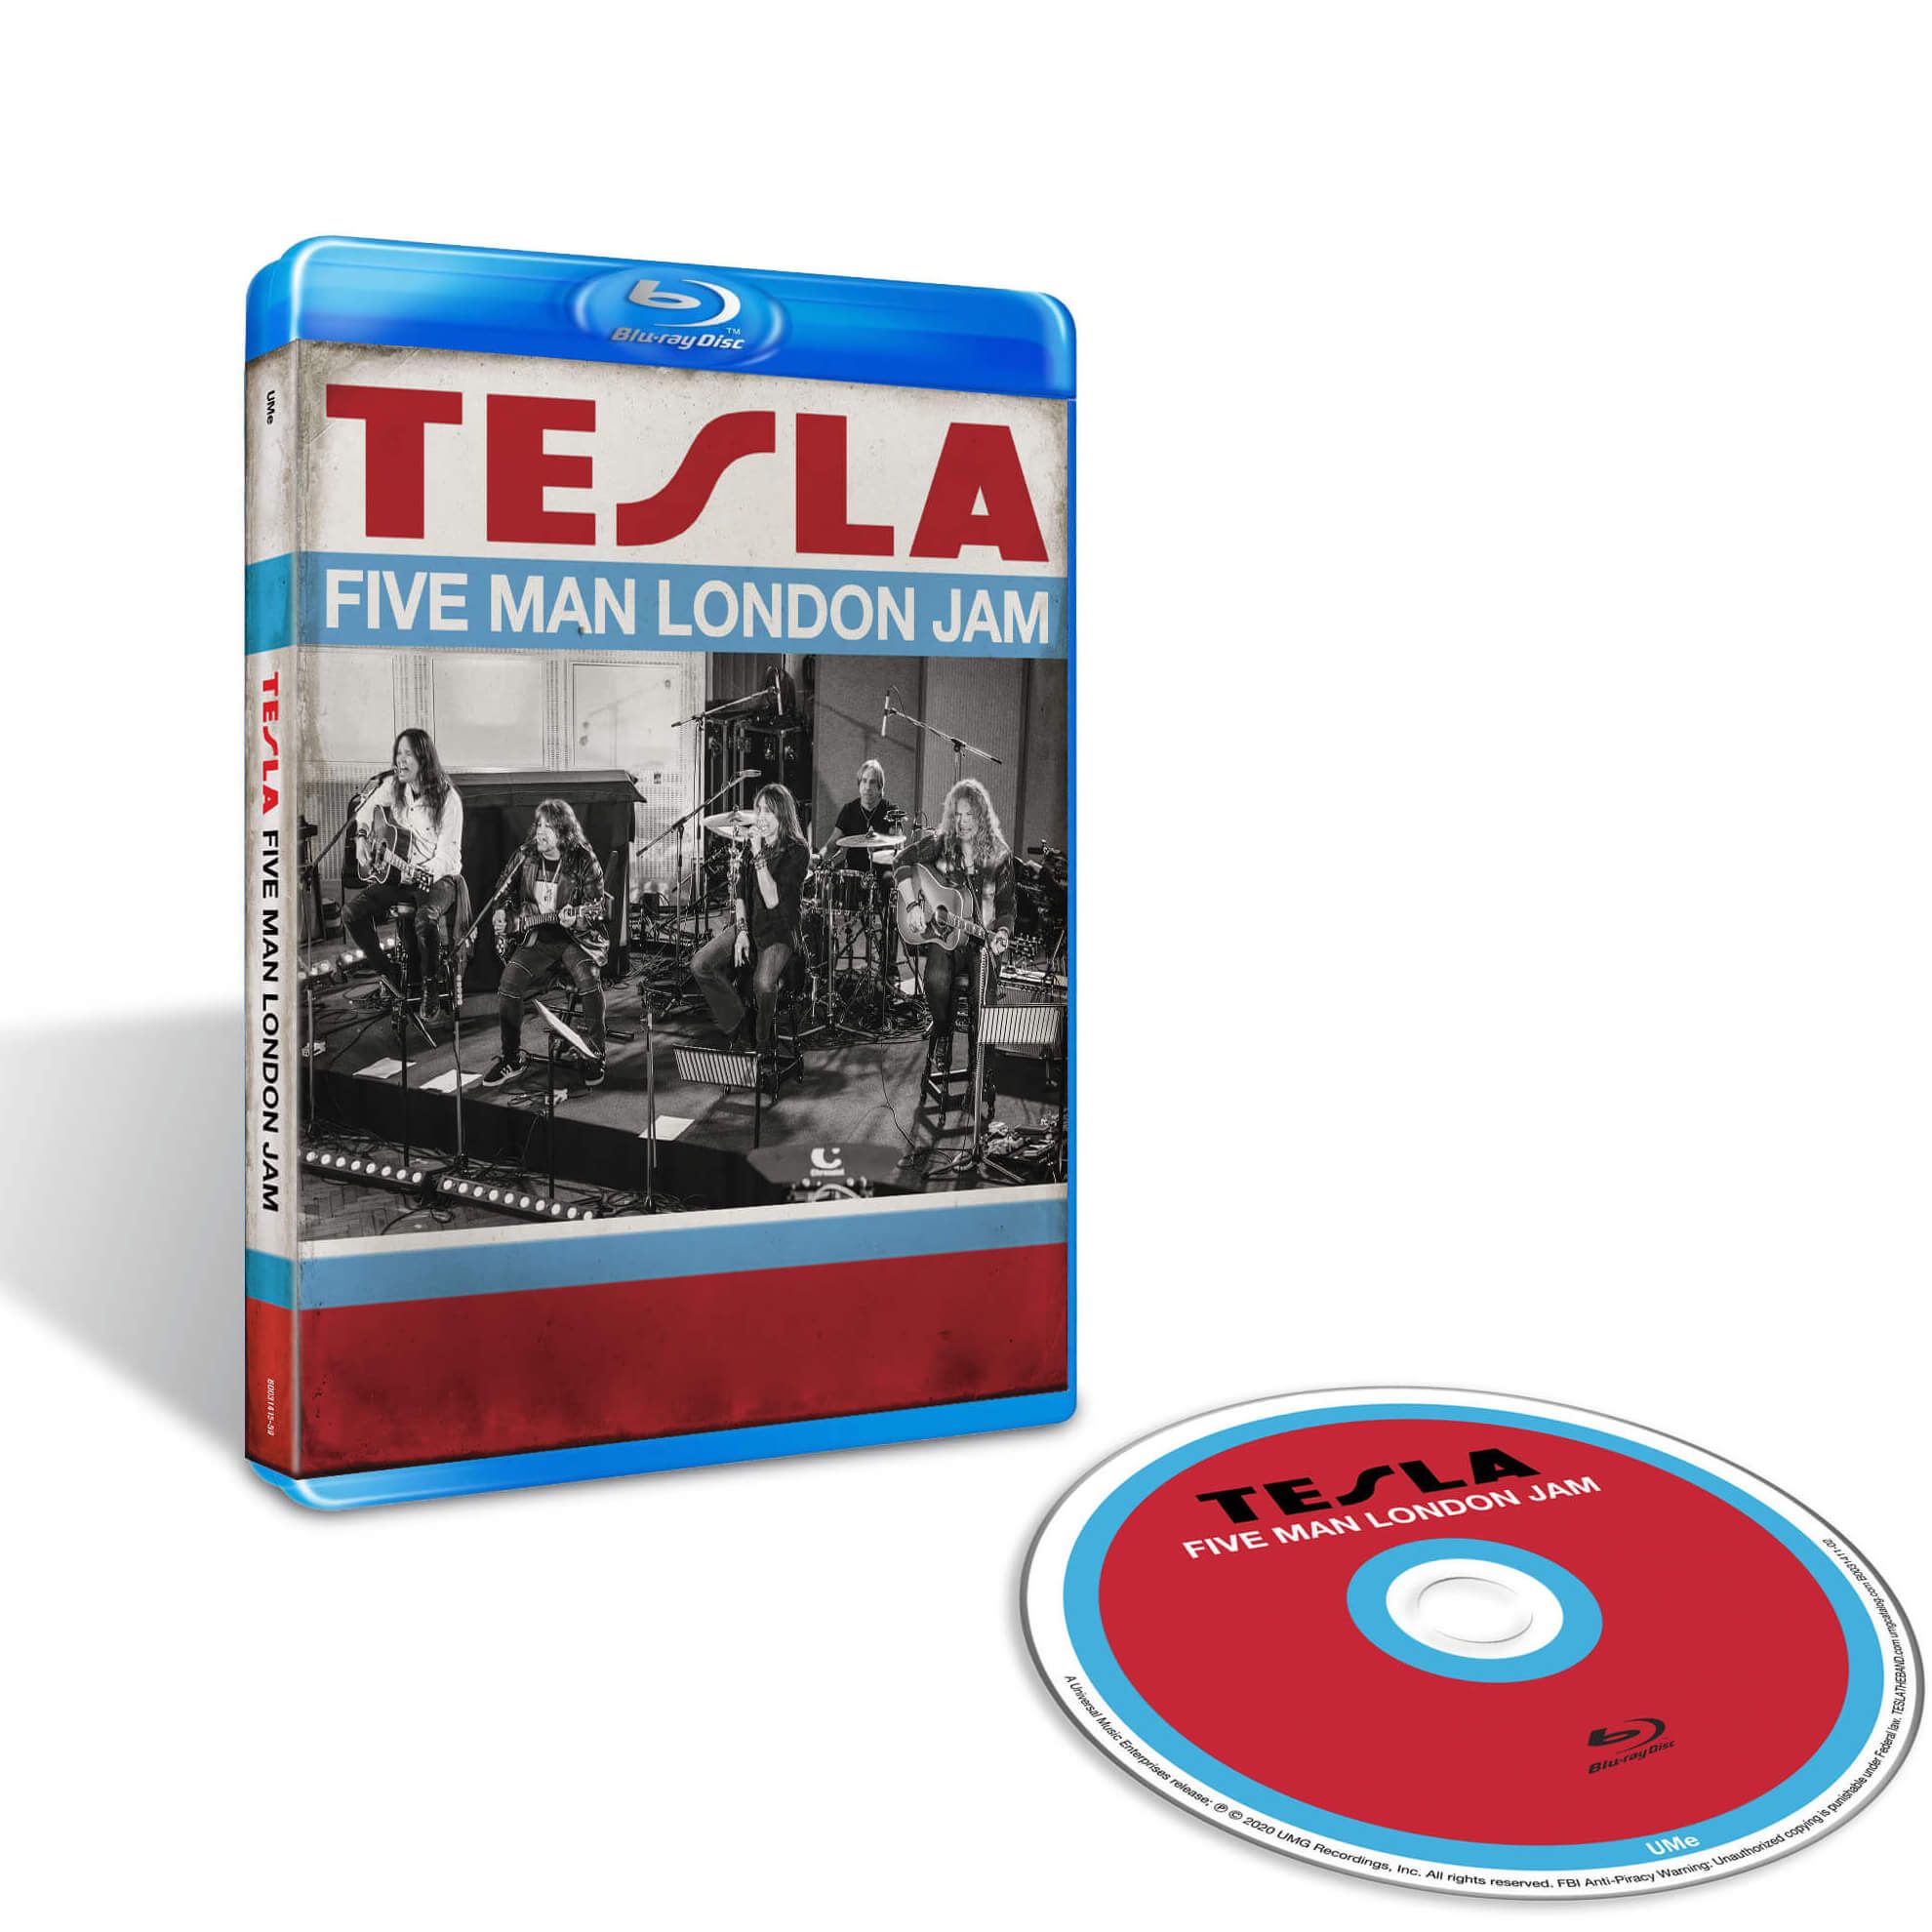 "Five Man London Jam"-LP/CD/Blu-ray erscheint im März